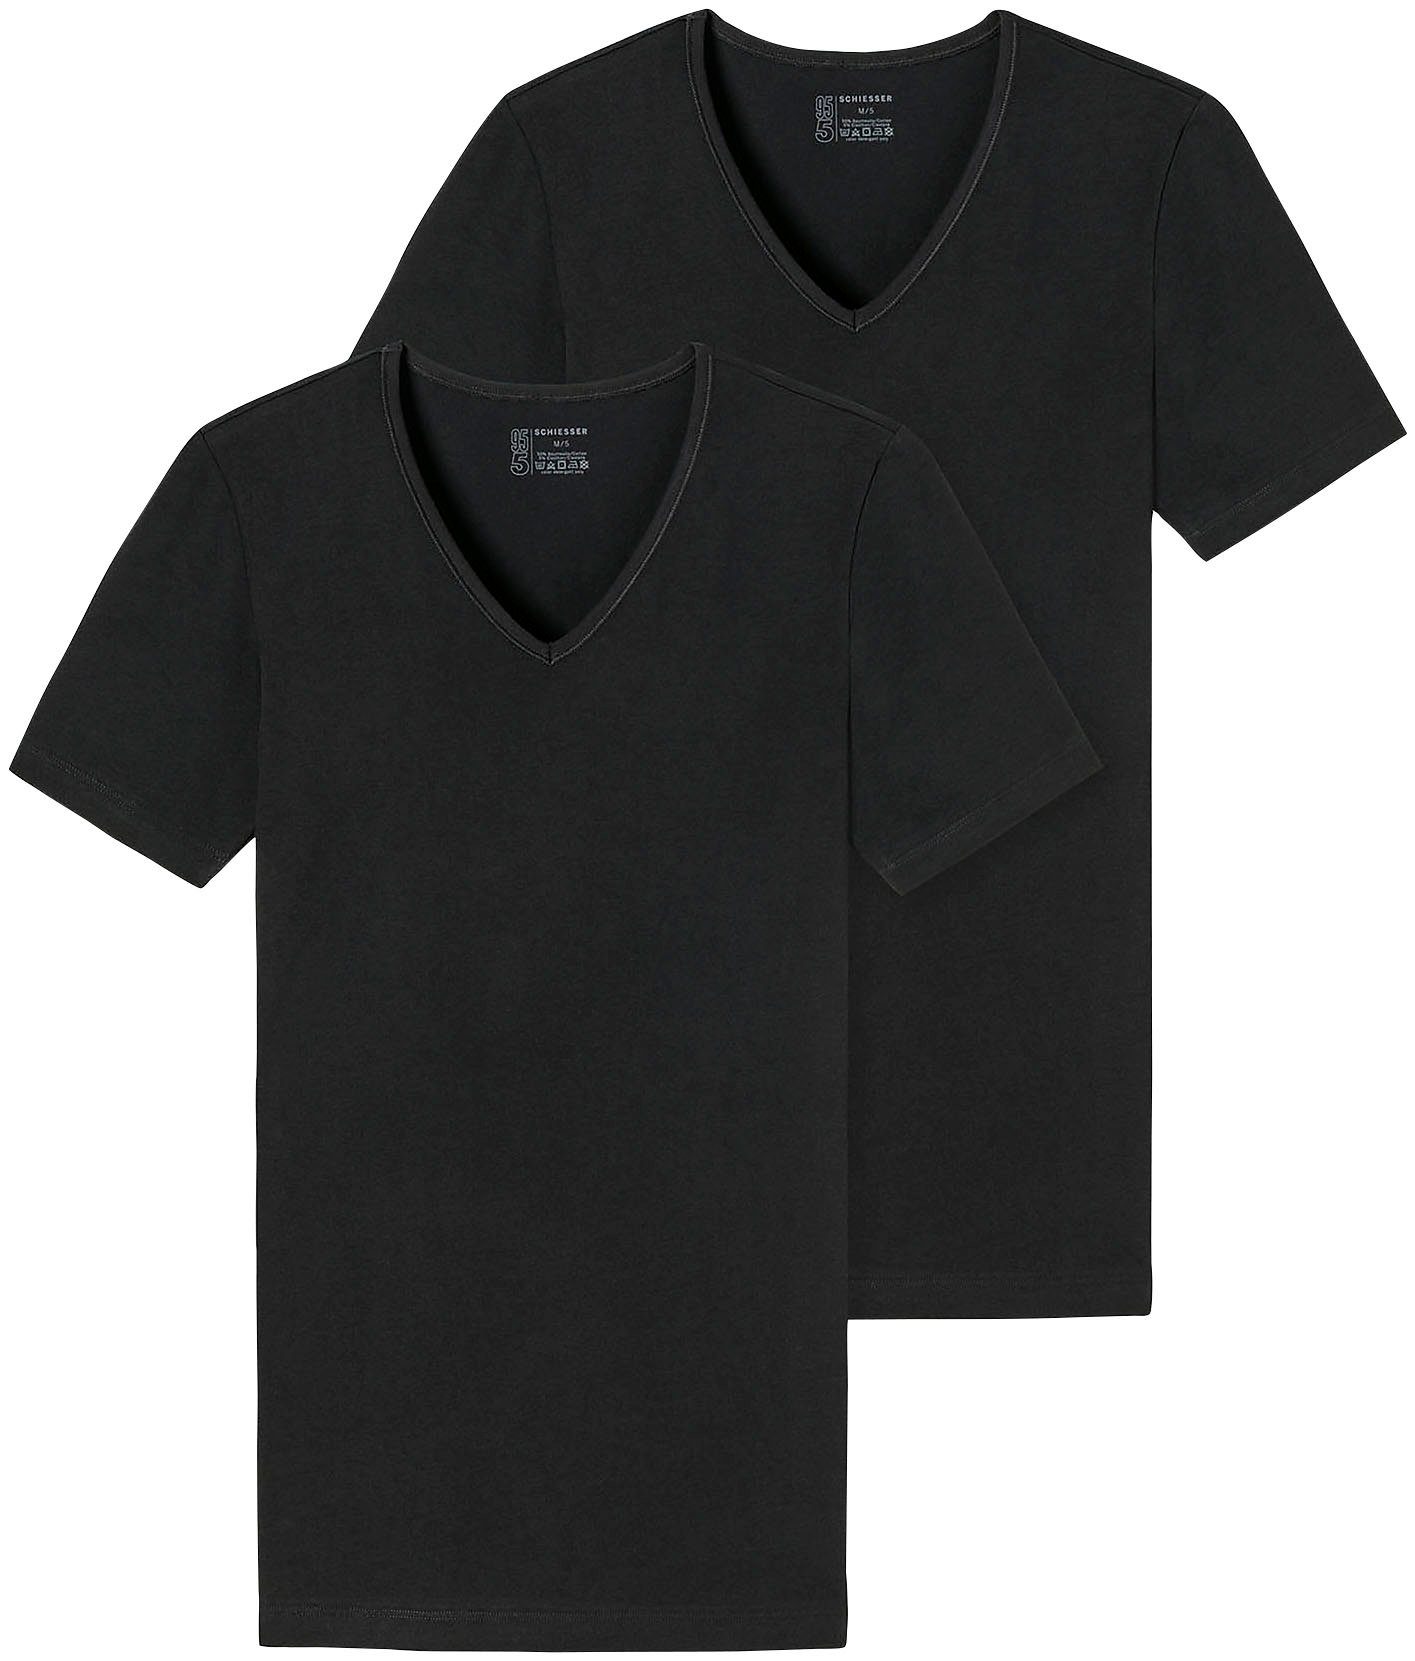 Schiesser V-Shirt schwarz mit (2er-Pack) V-Ausschnitt